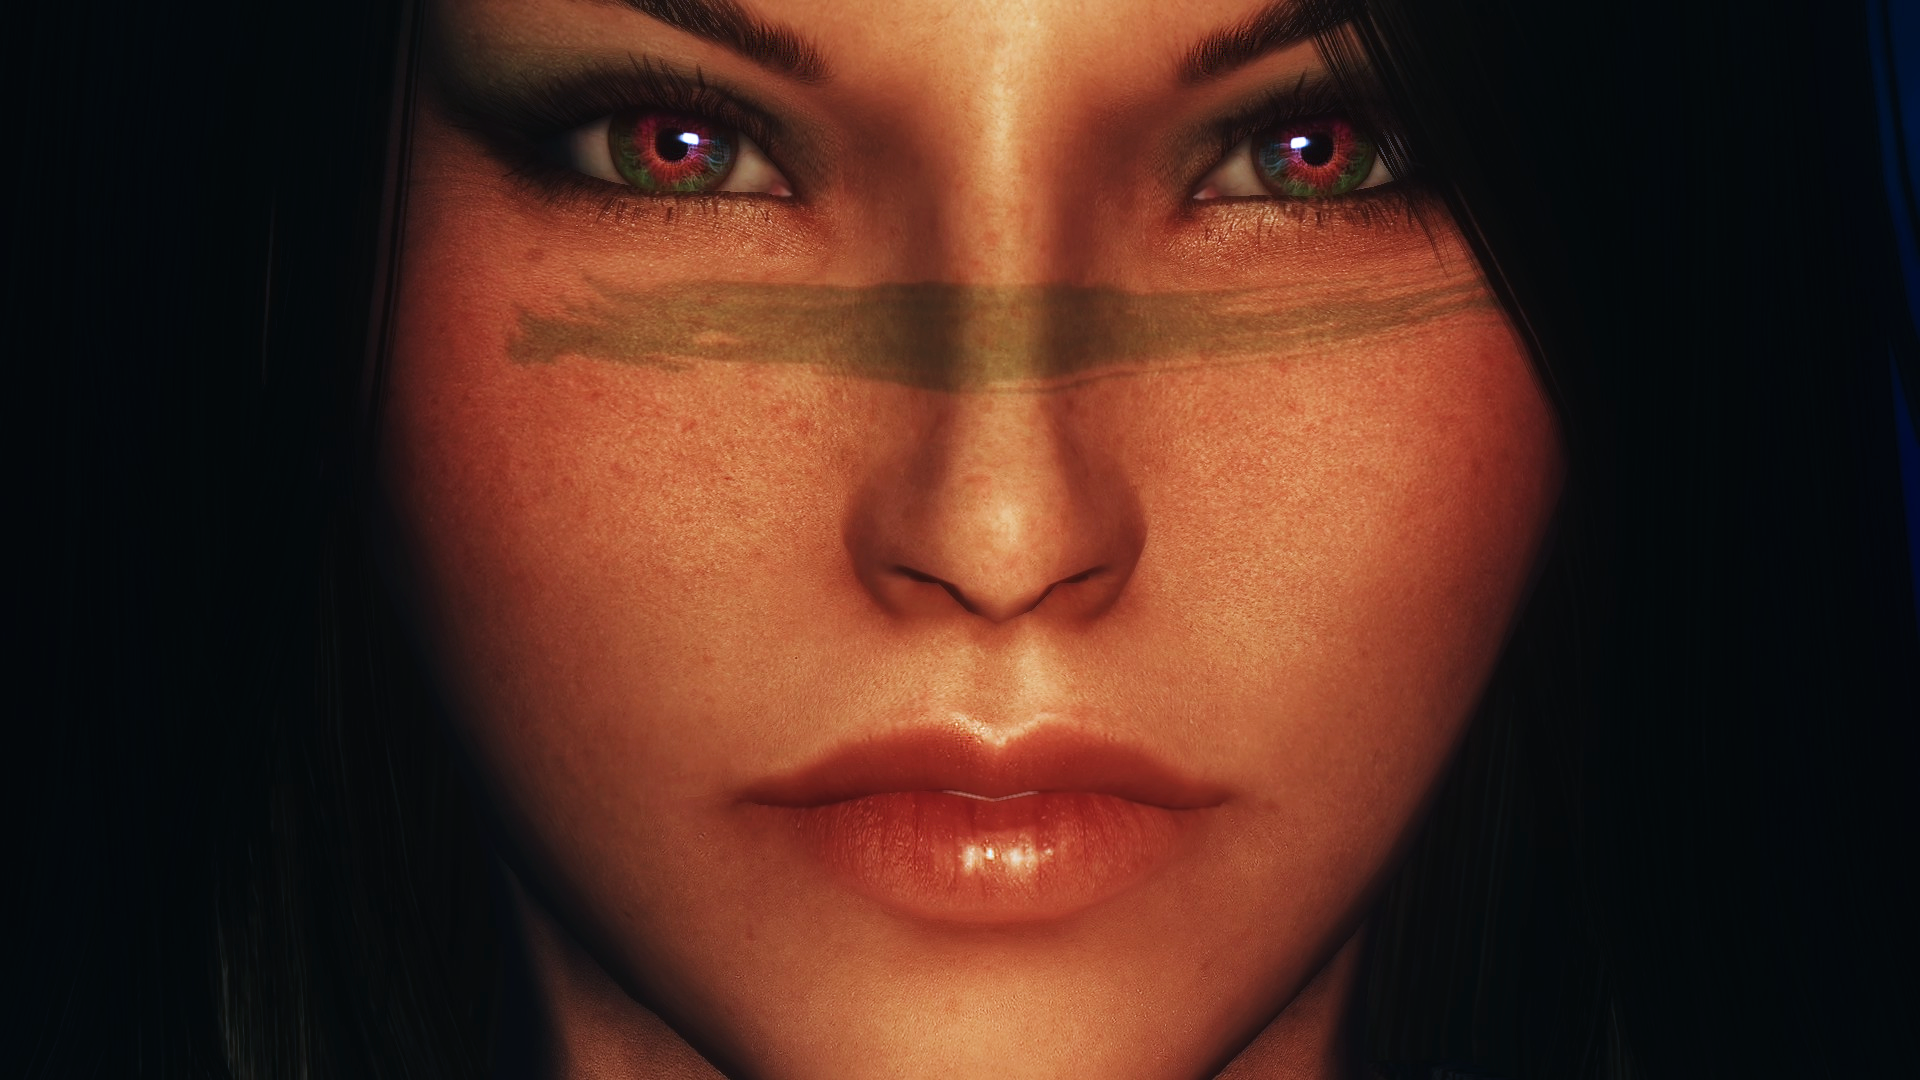 General 1920x1080 The Elder Scrolls V: Skyrim women face video games PC gaming modding video game girls closeup fantasy girl